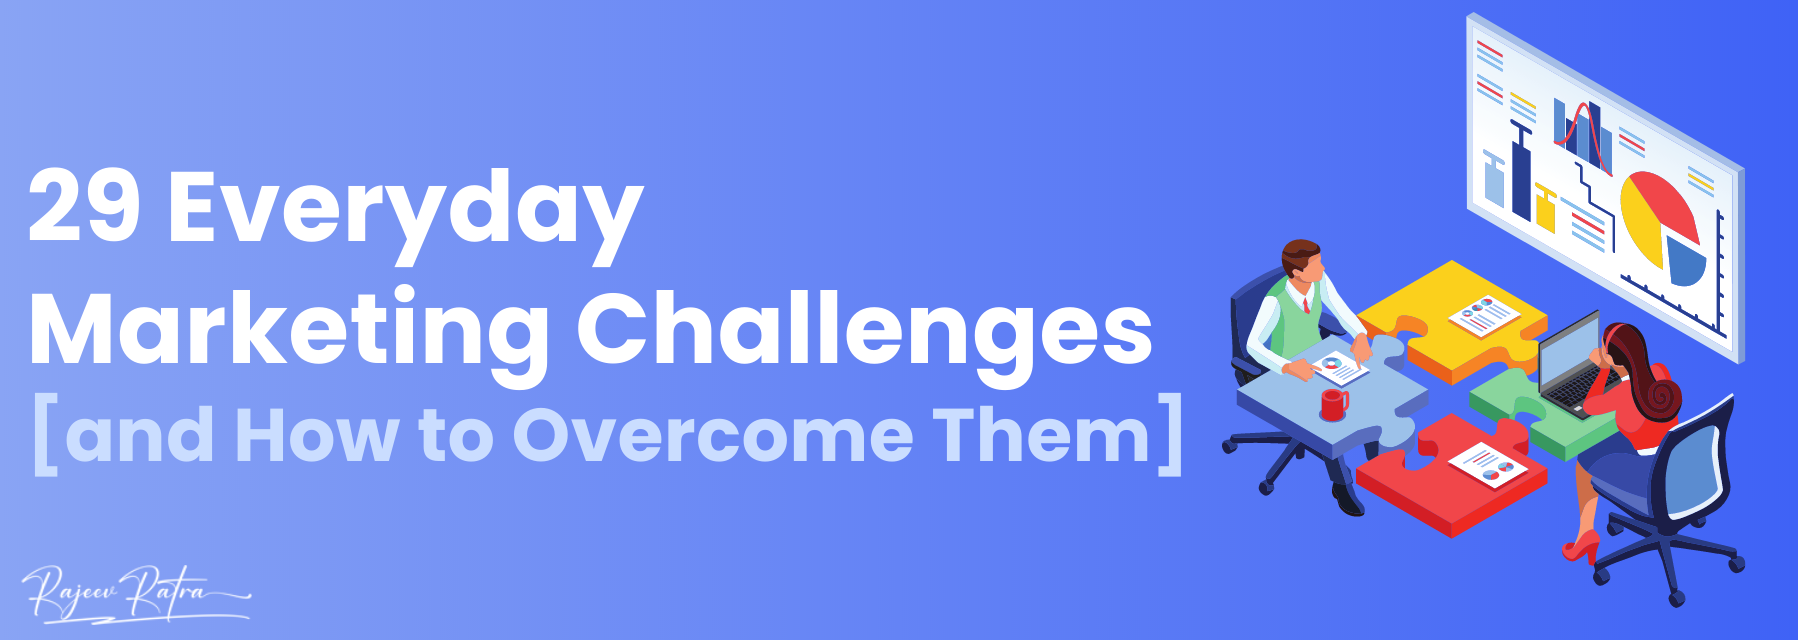 Everyday Marketing Challenges